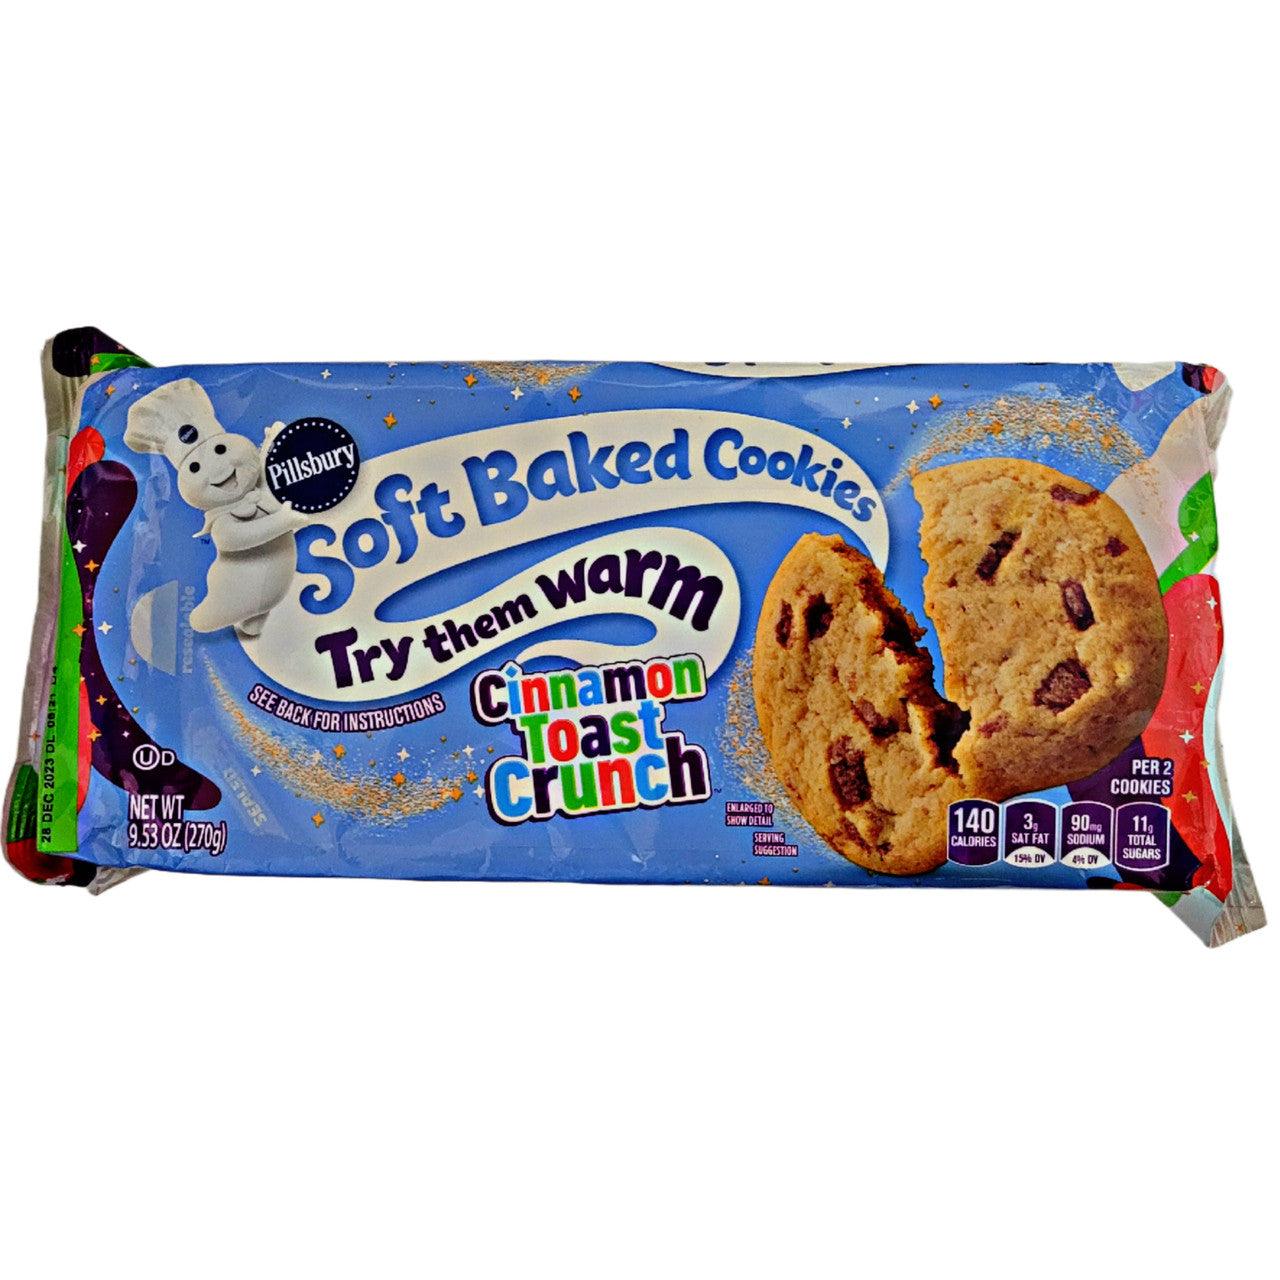 Pillsbury Soft Baked Cookies Cinnamon Toast Crunch - Extreme Snacks